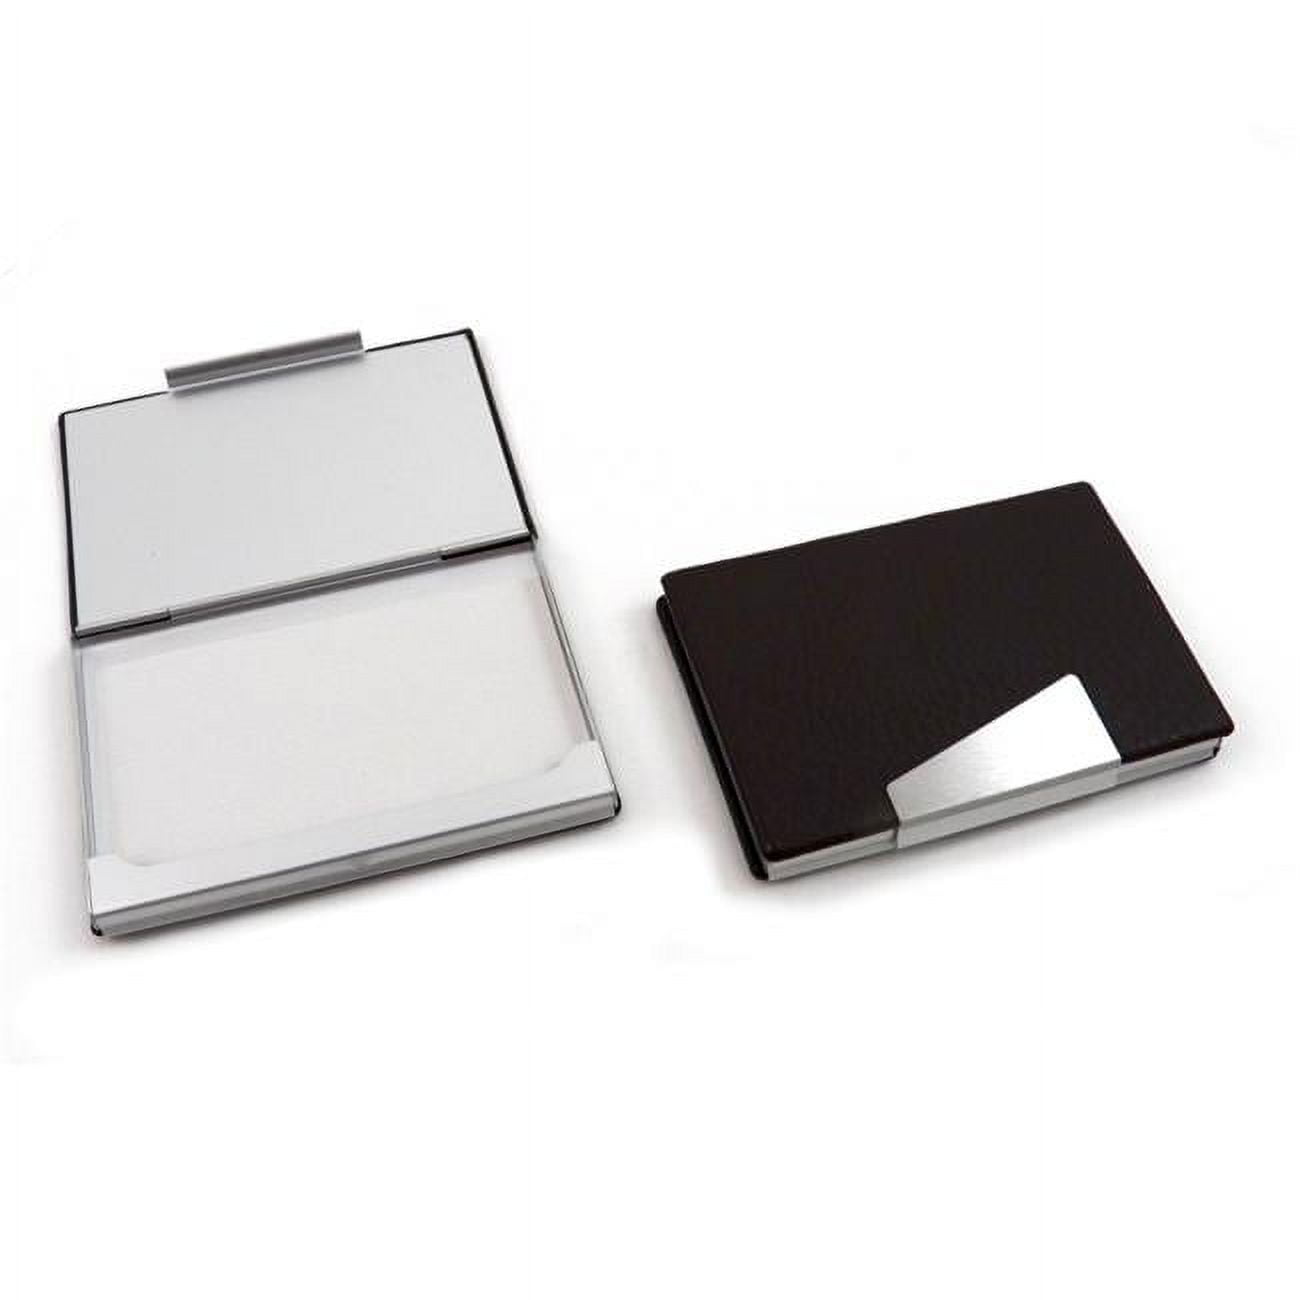 Bey-berk International D259n Black Leather Business Card Case With Aluminum Trim